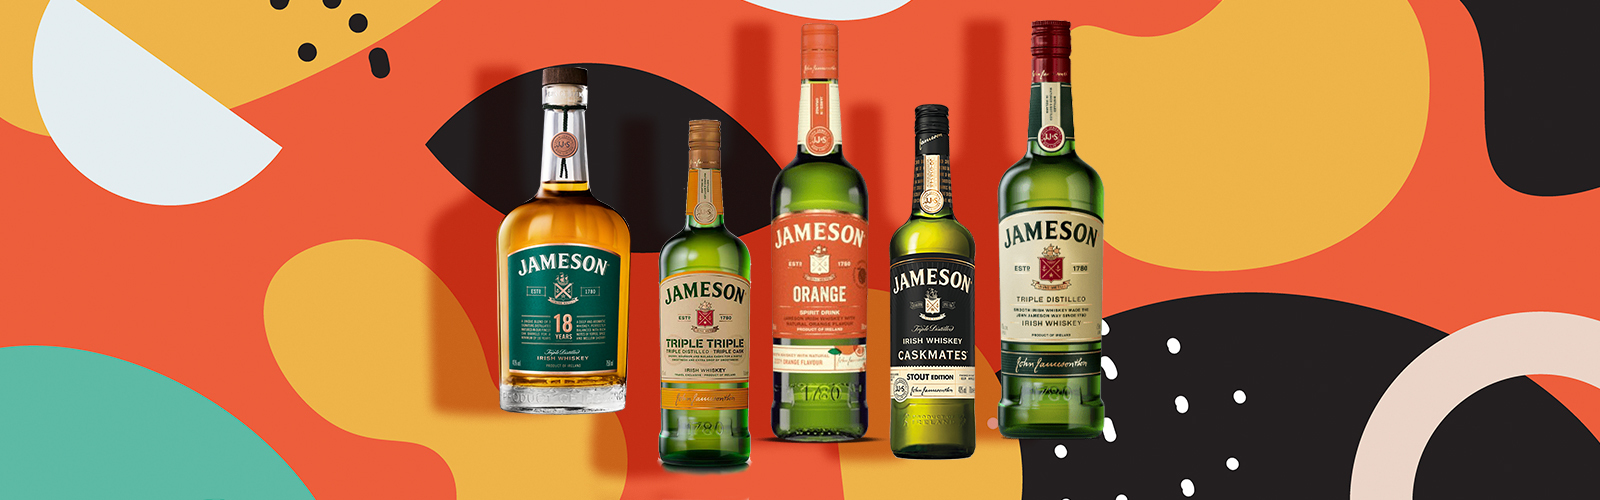 10 Jameson Irish Whiskey Bottles, Tasted and Ranked